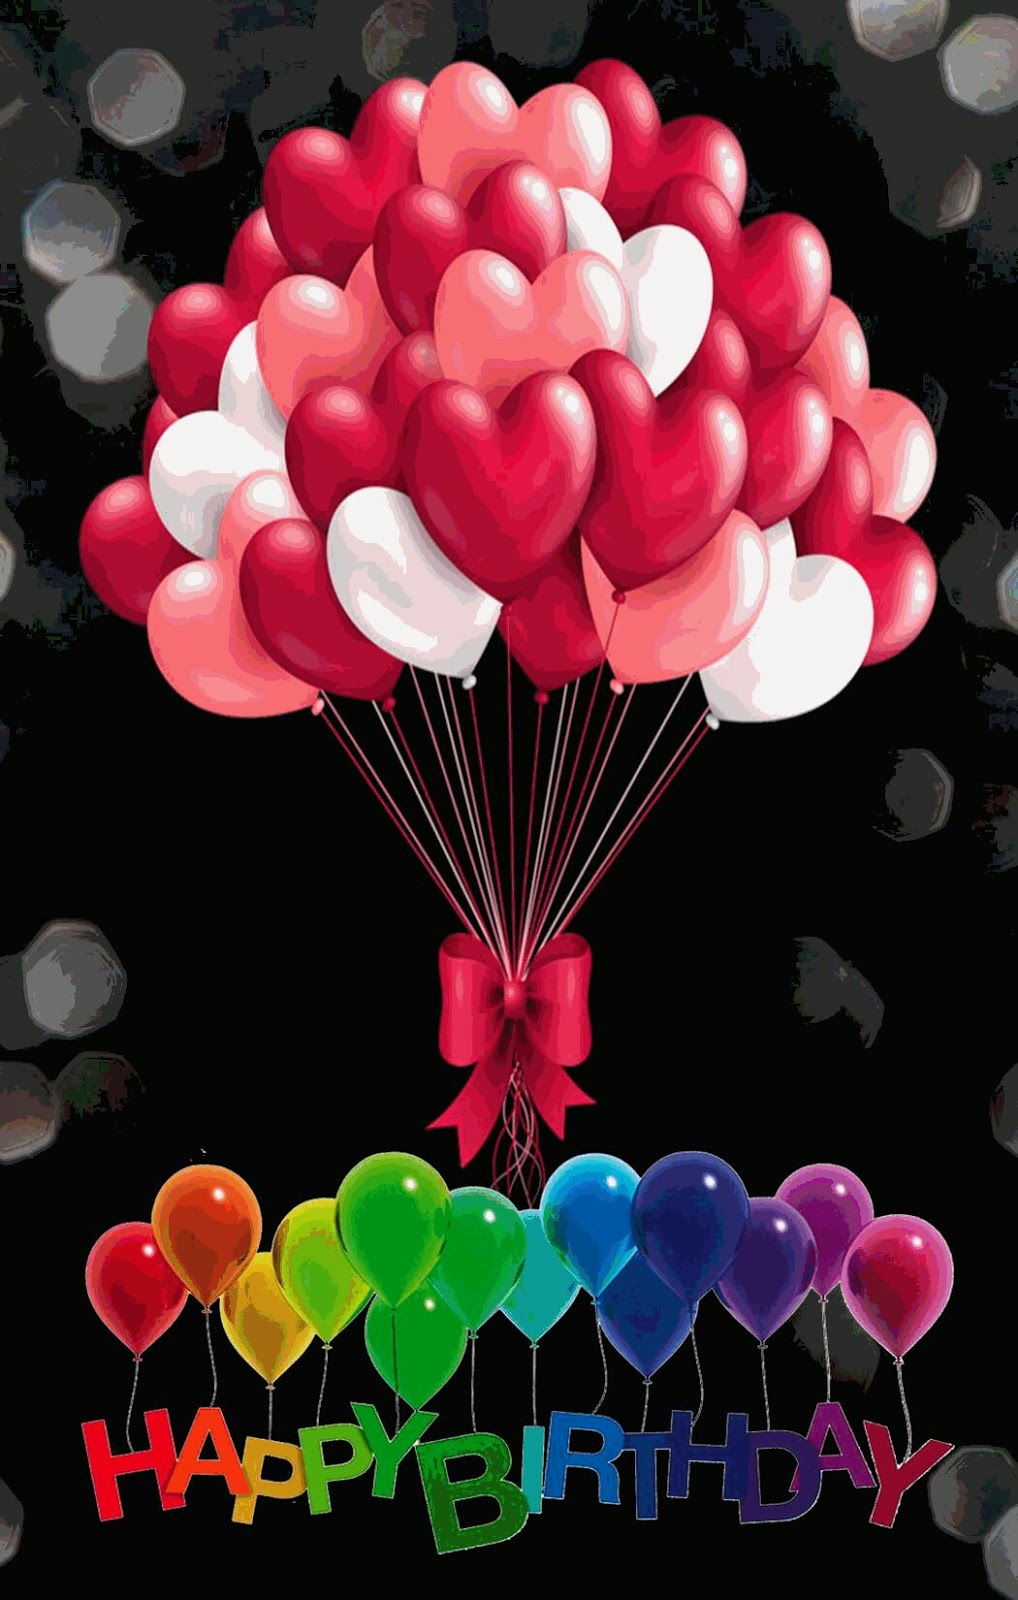 Happy Birthday wishing photos Balloon 